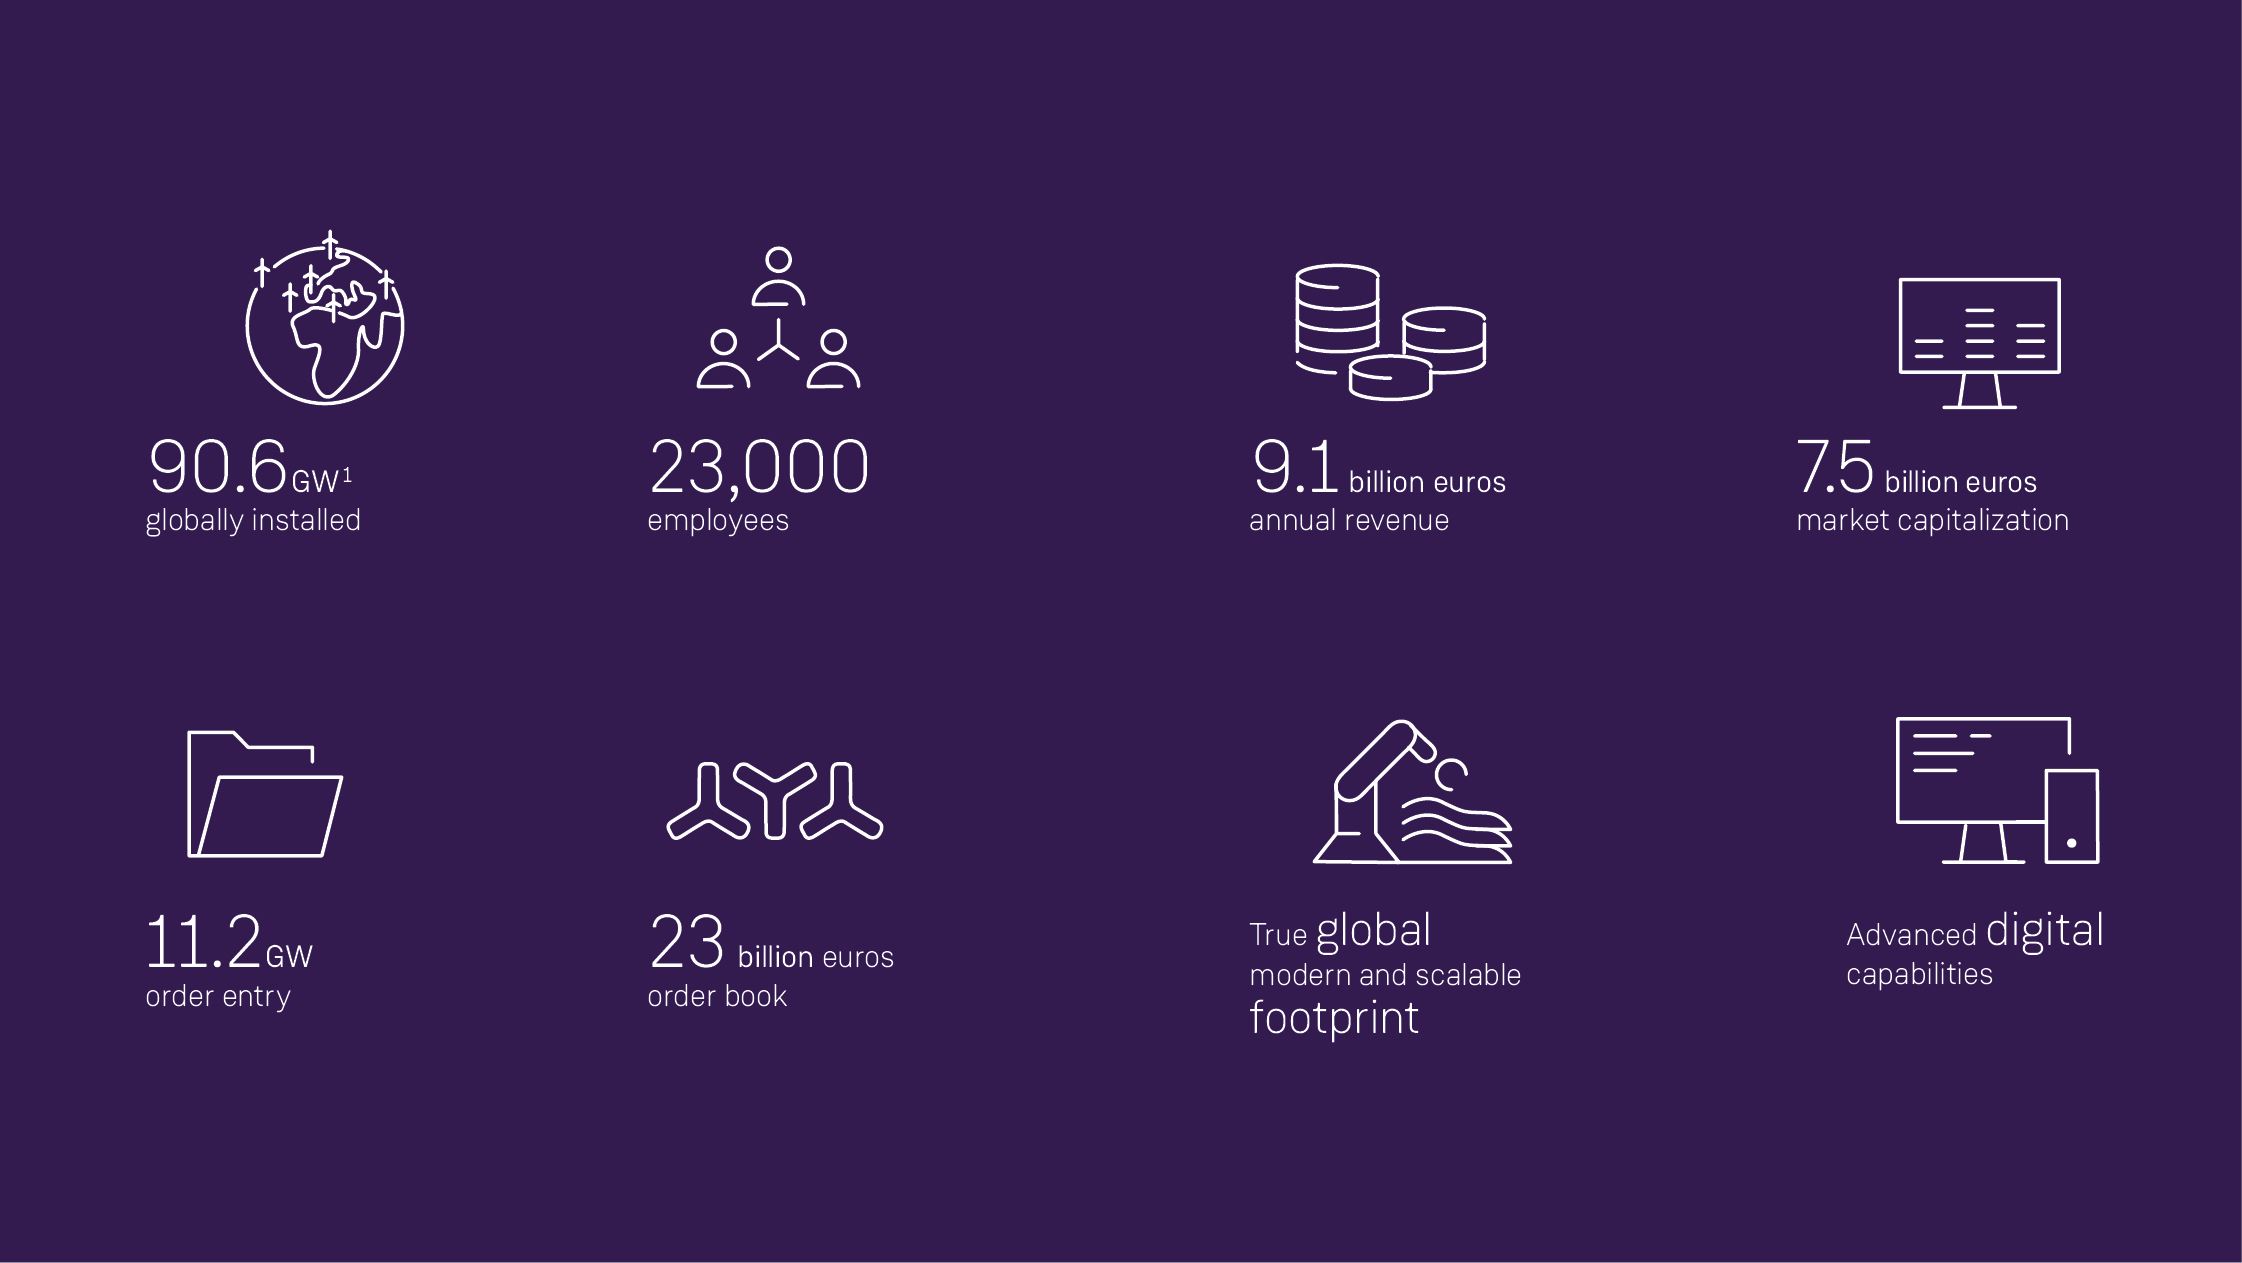 Siemens Gamesa fiscal year 2018 key facts